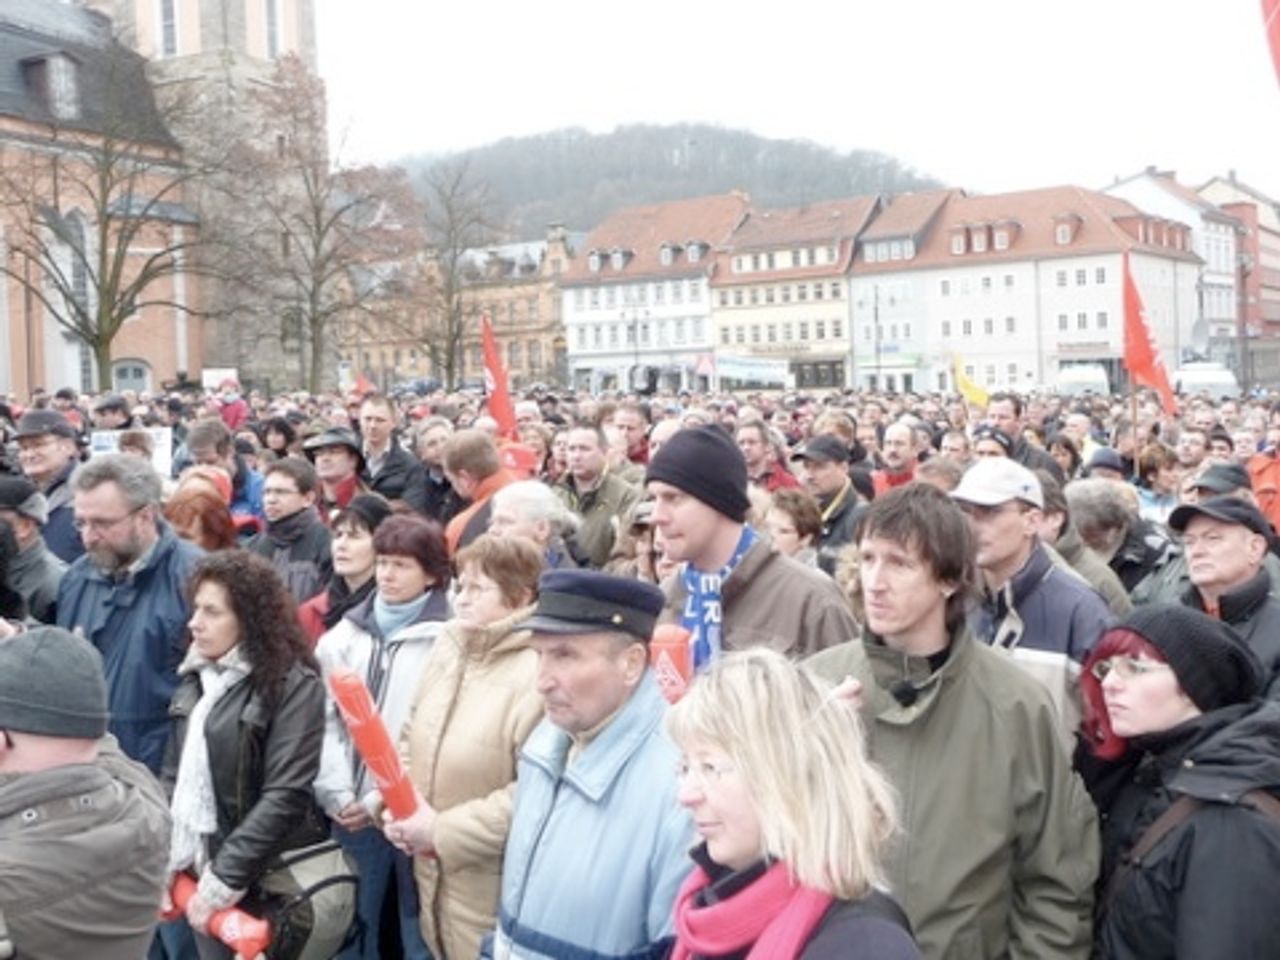 Day of action in Eisenach